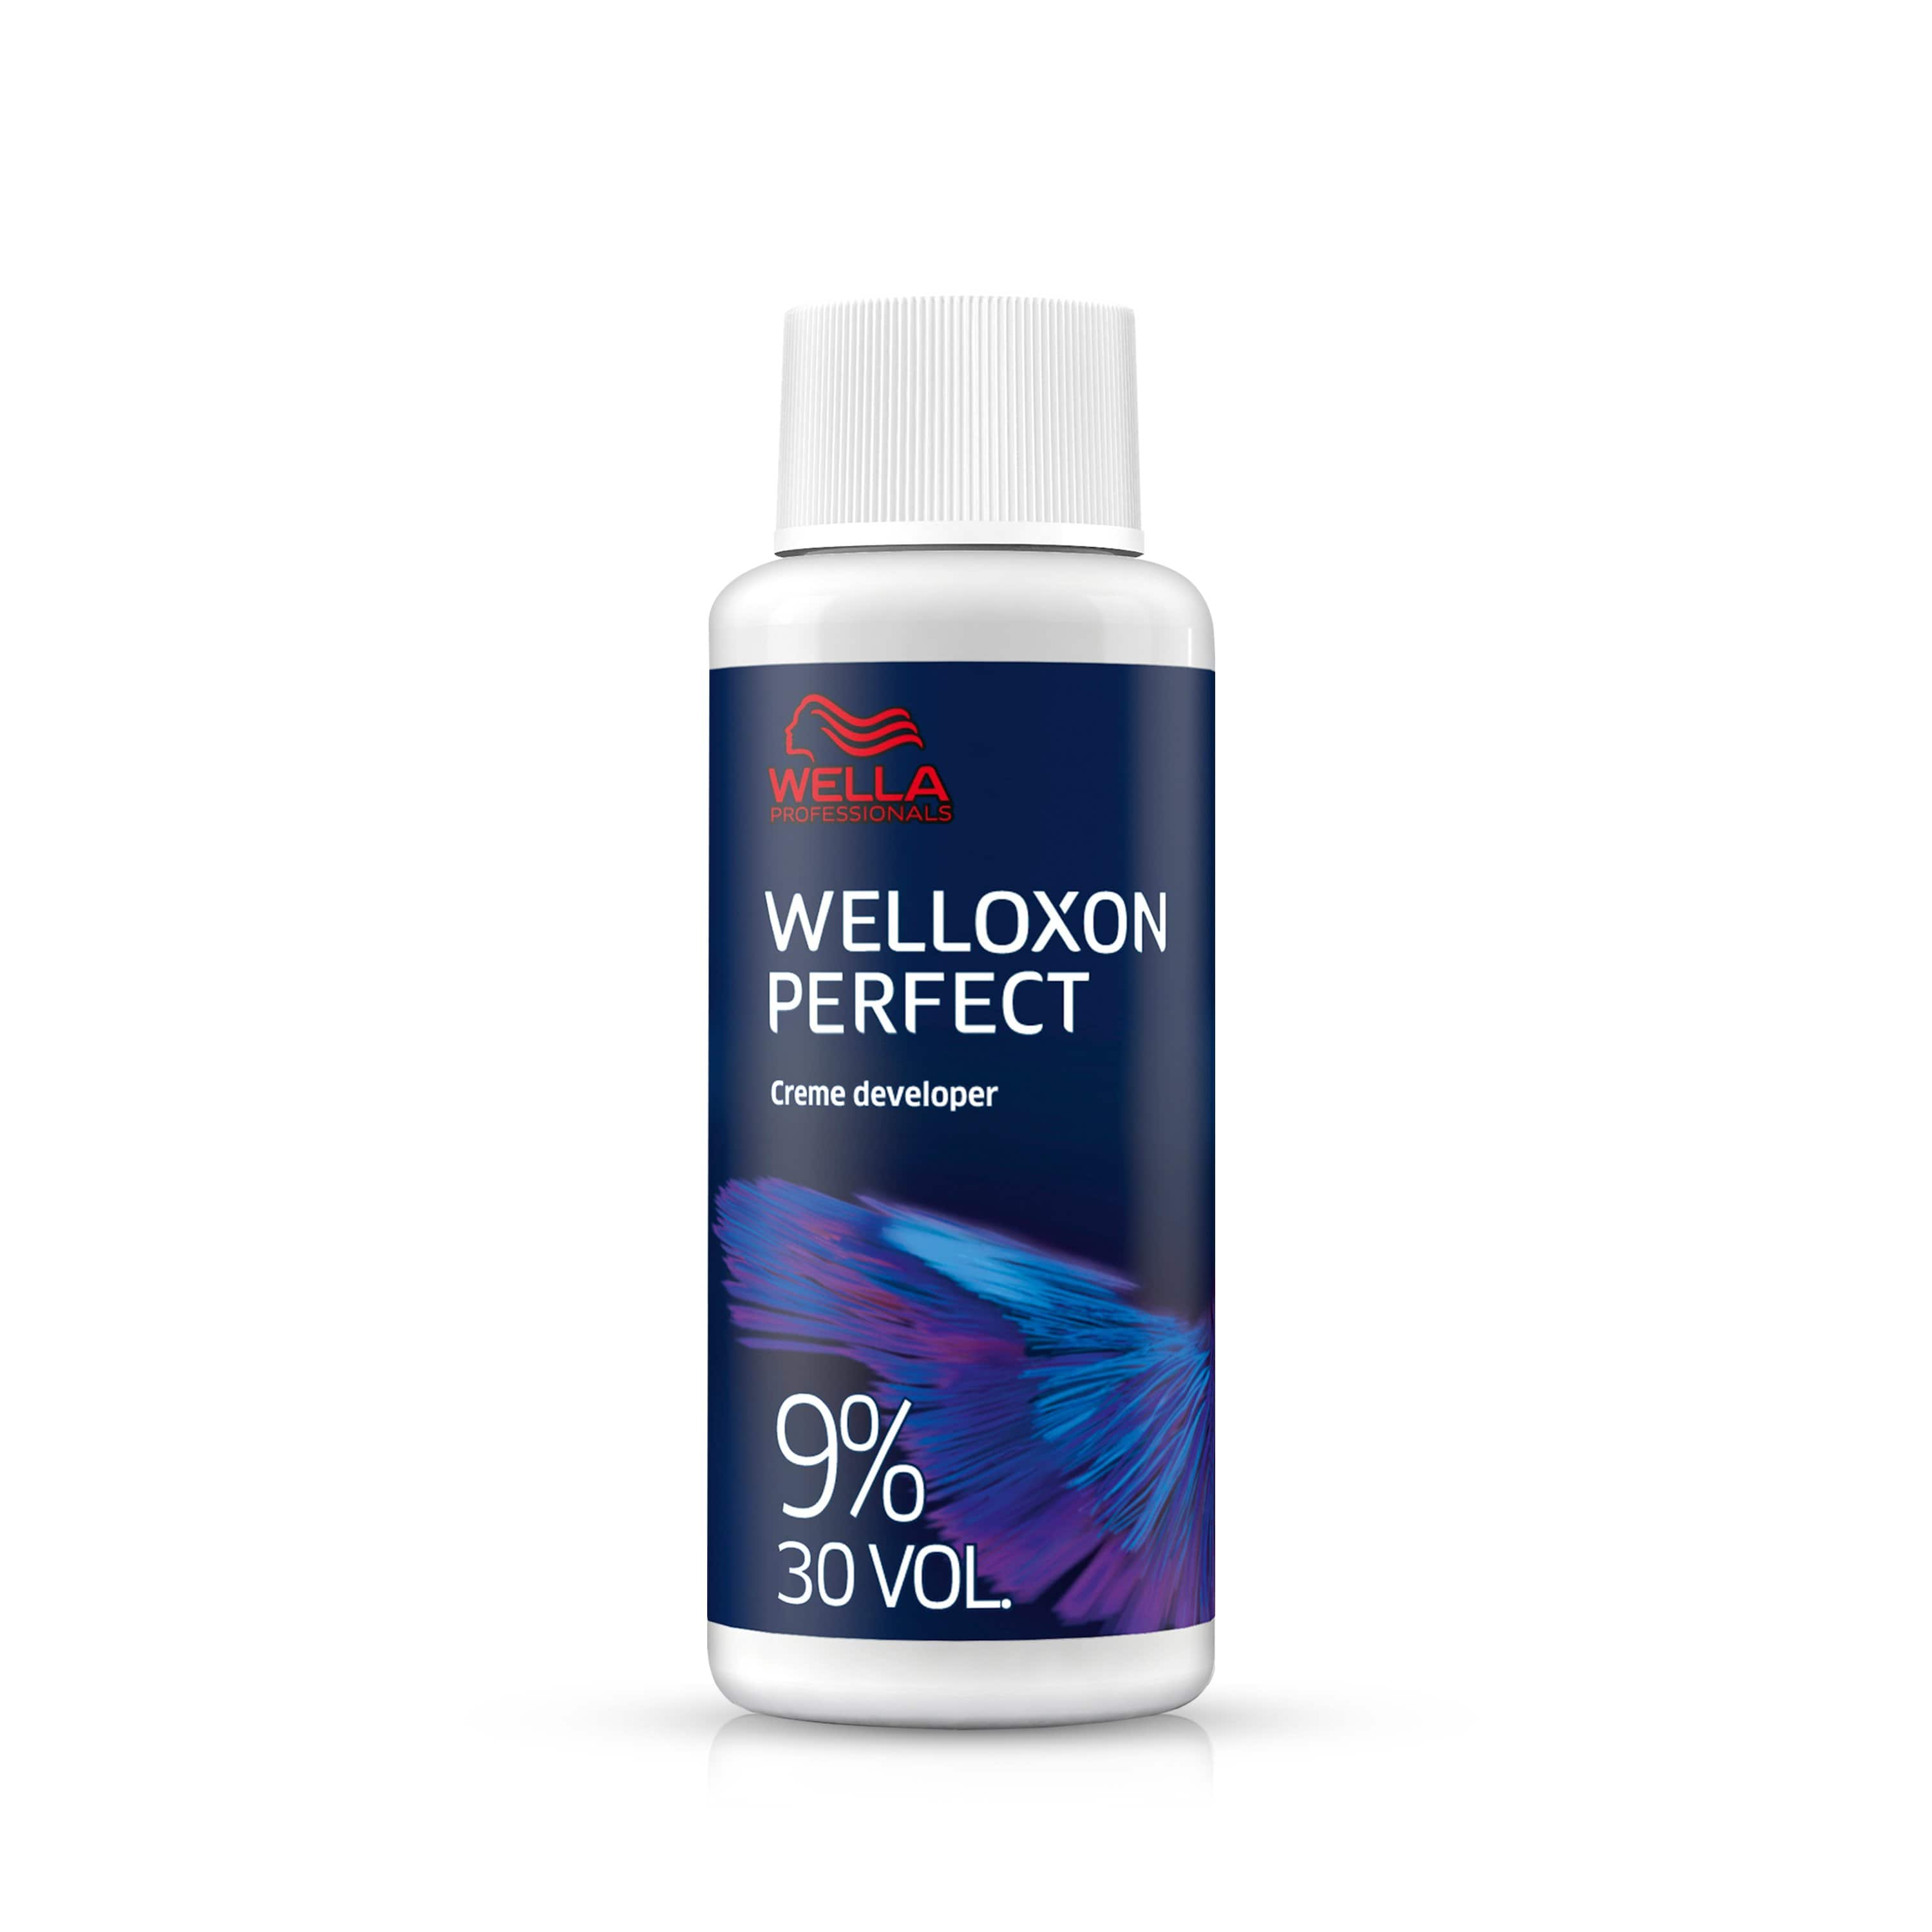 Welloxon Oxigenada WELLOXON PERFECT 30 Vol 9% 60ML Roberta Beauty Club